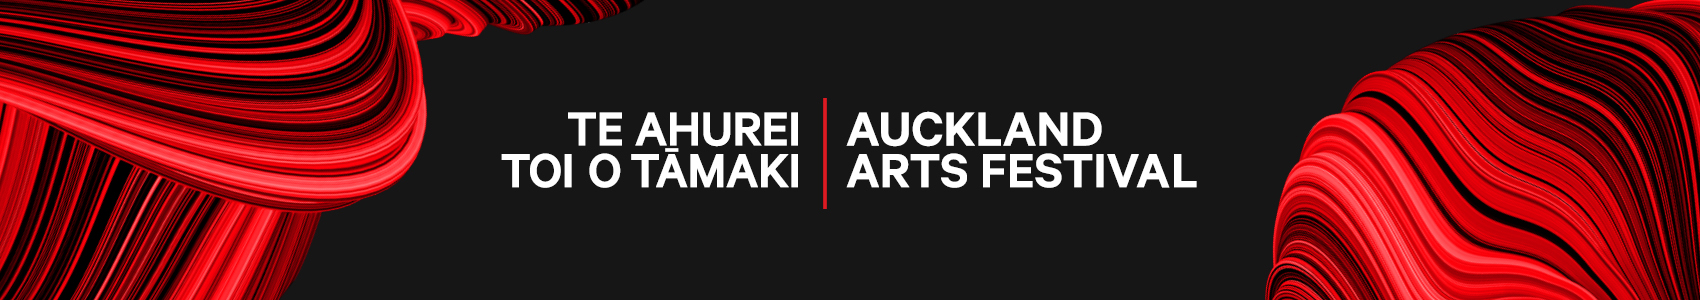 TE AHUREI TOI O TĀMAKI | AUCKLAND ARTS FESTIVAL CANCELS LIVE EVENTS 